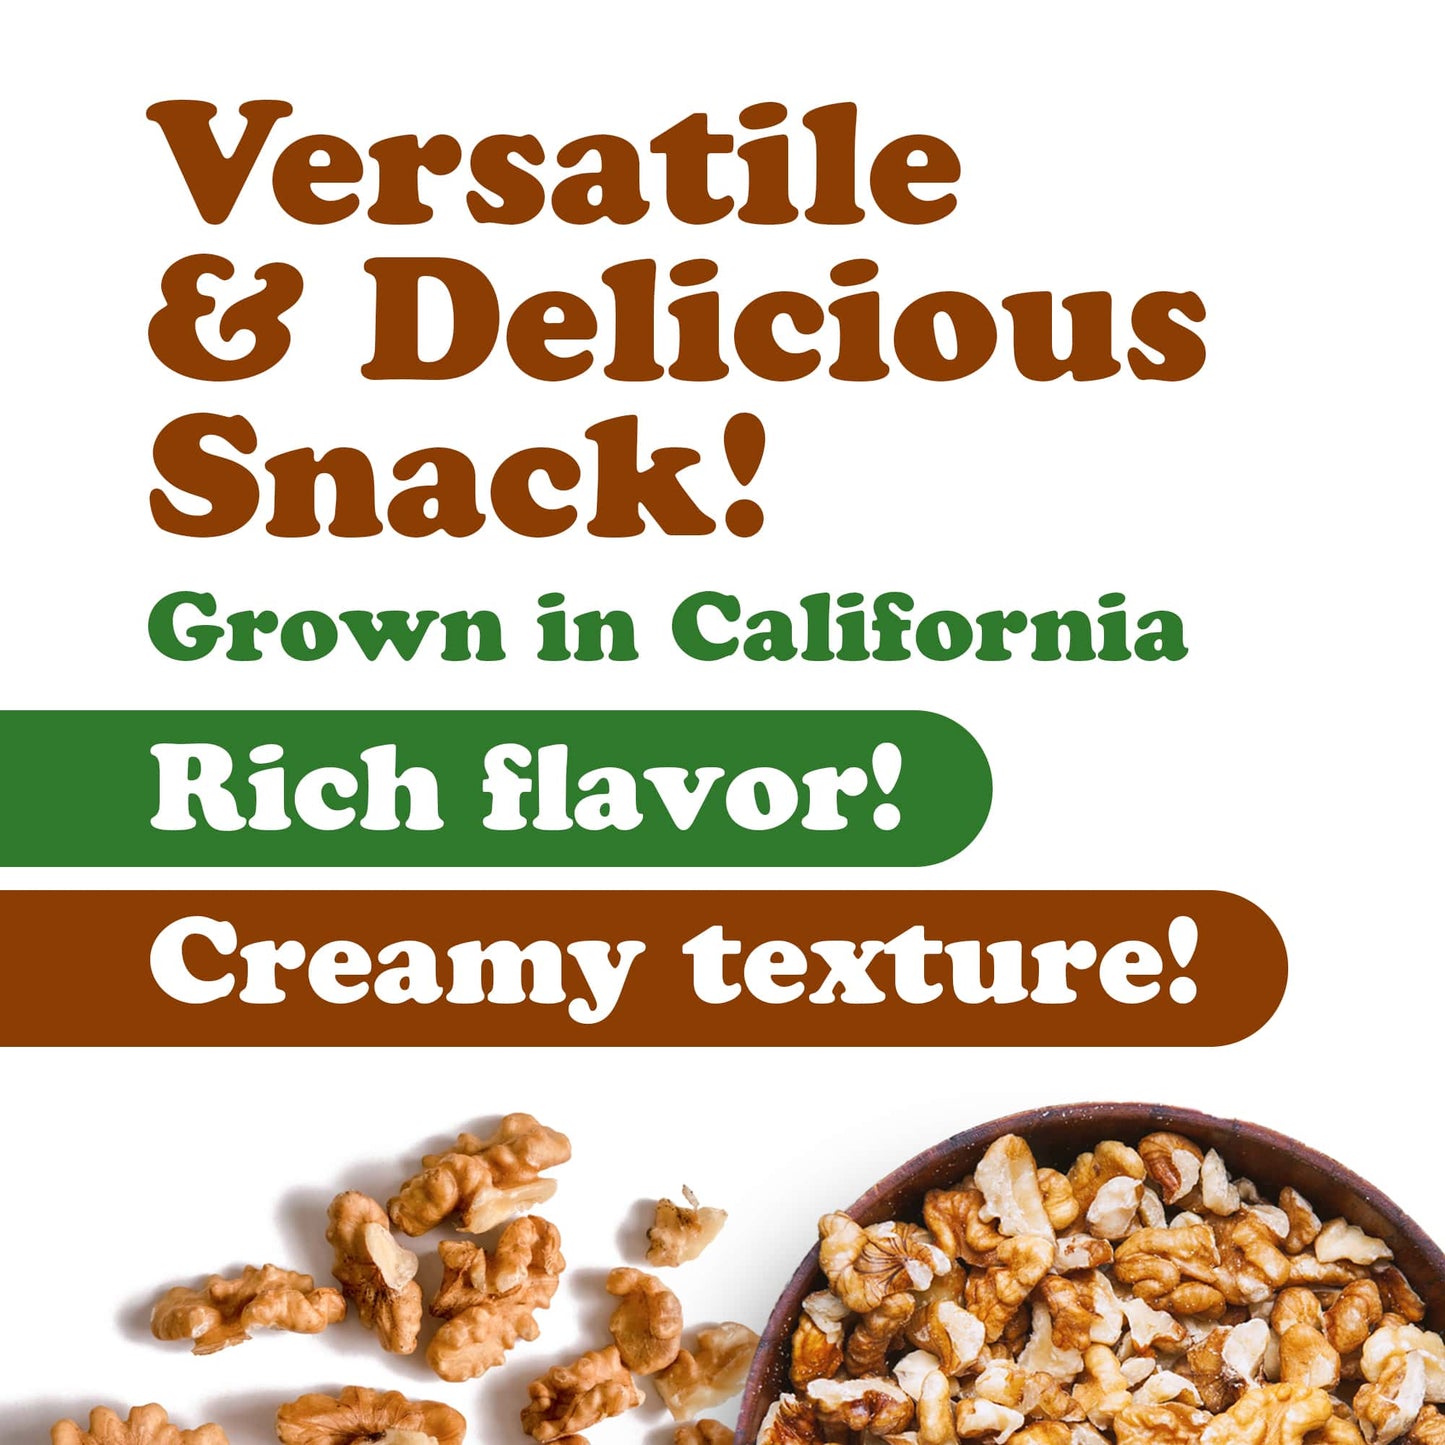 Organic Walnut Pieces – California Chandler Variety. Medium Size. Non-GMO. Rich in Omega-3, Antioxidants, Fiber. Great for Snacking, Baking and Salads. Keto, Vegan, Fresh, Raw, Kosher, Bulk